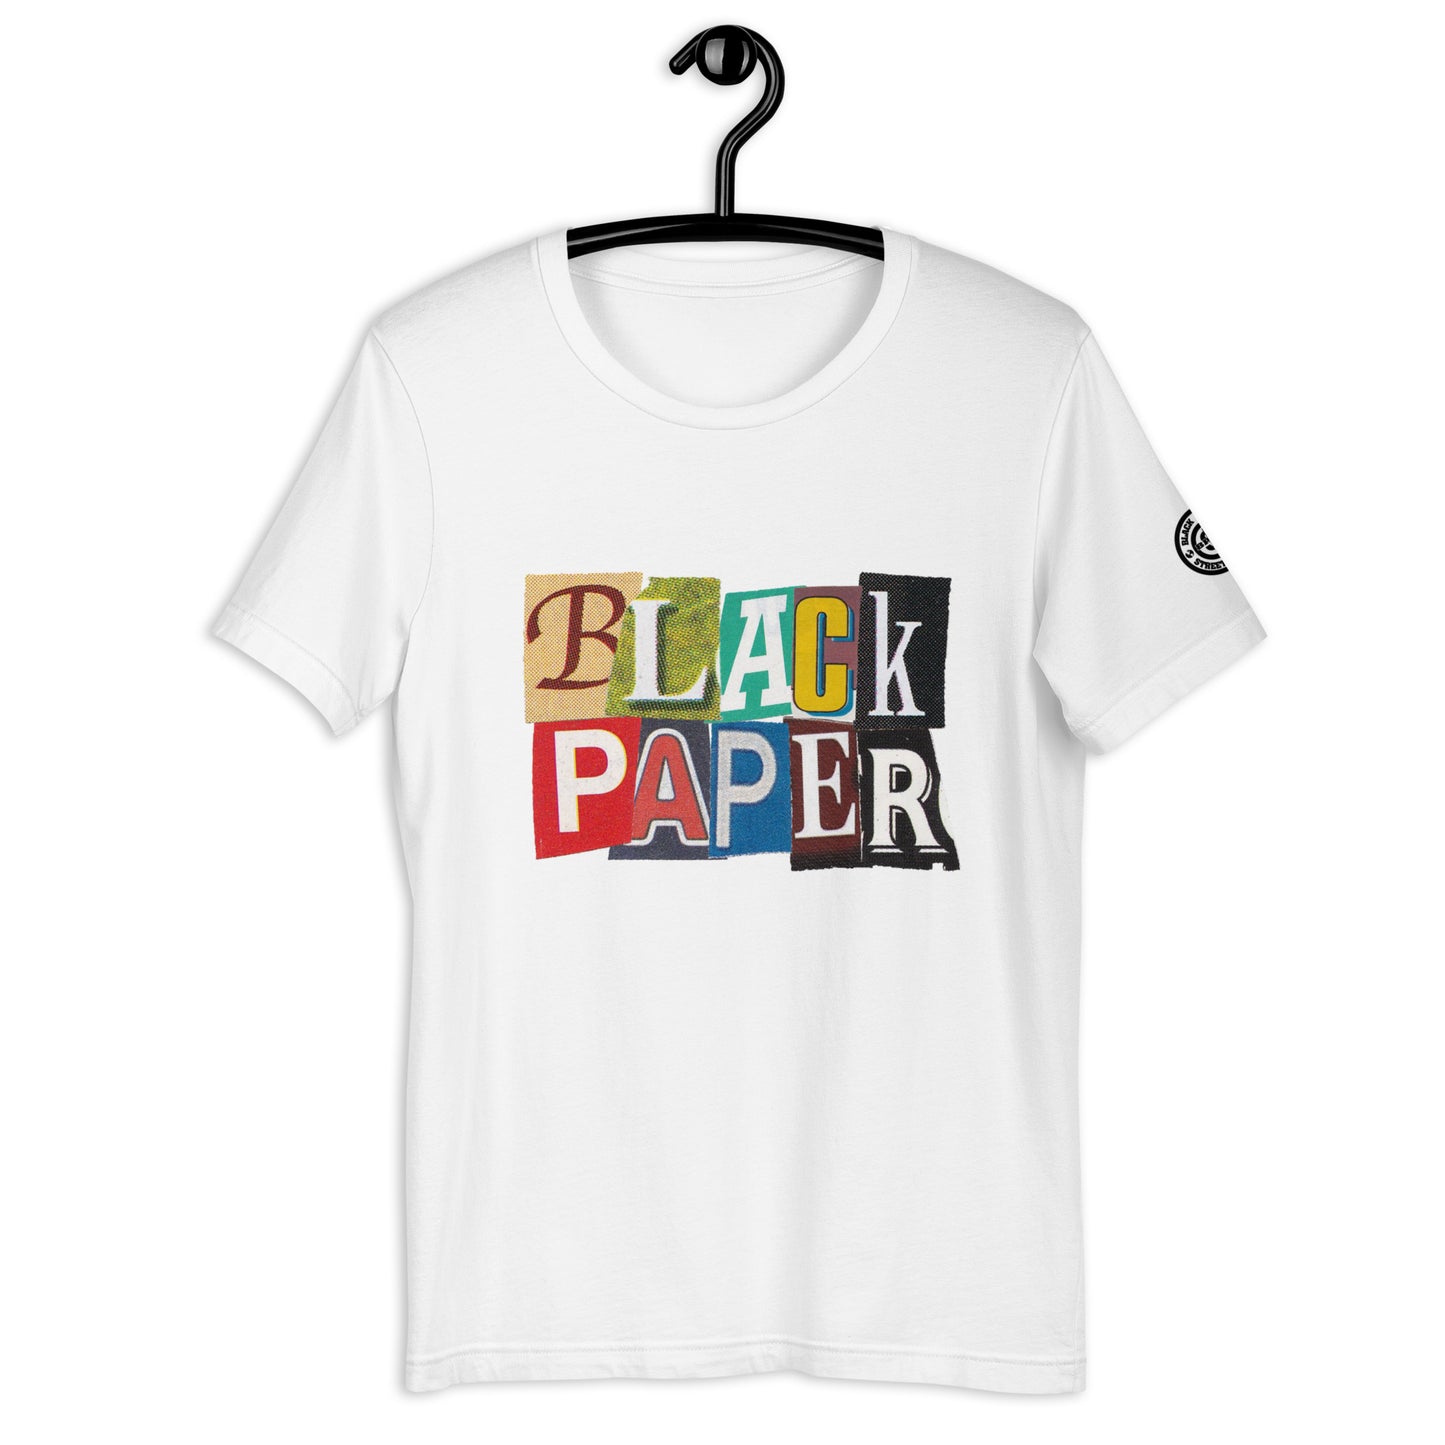 Black Paper - News Paper